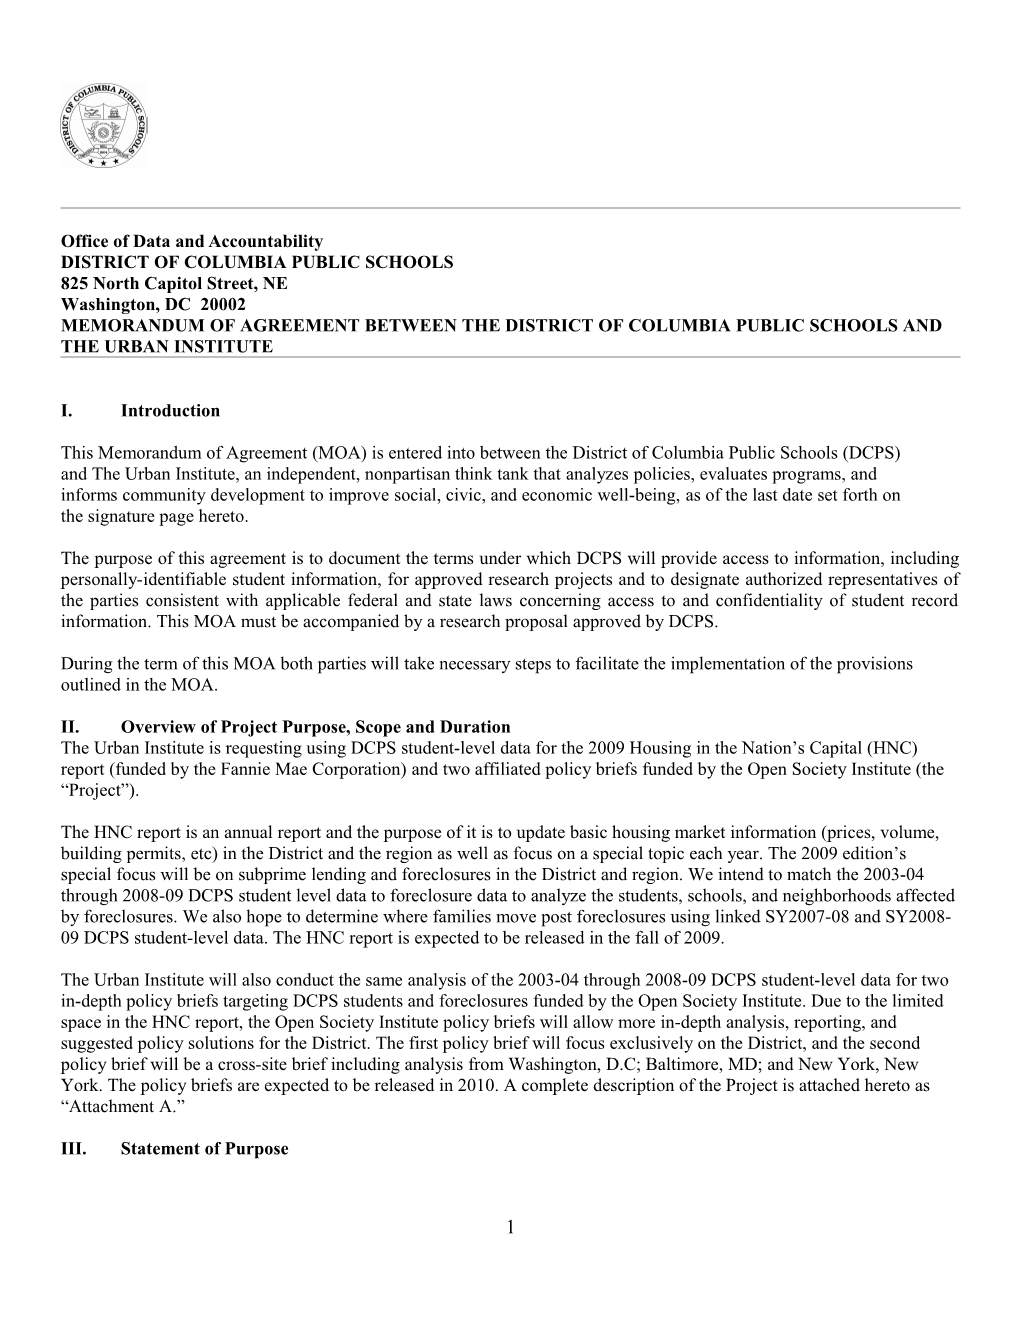 Memorandum of Agreement Between the District of Columbia Public Schools (Dcps) and The